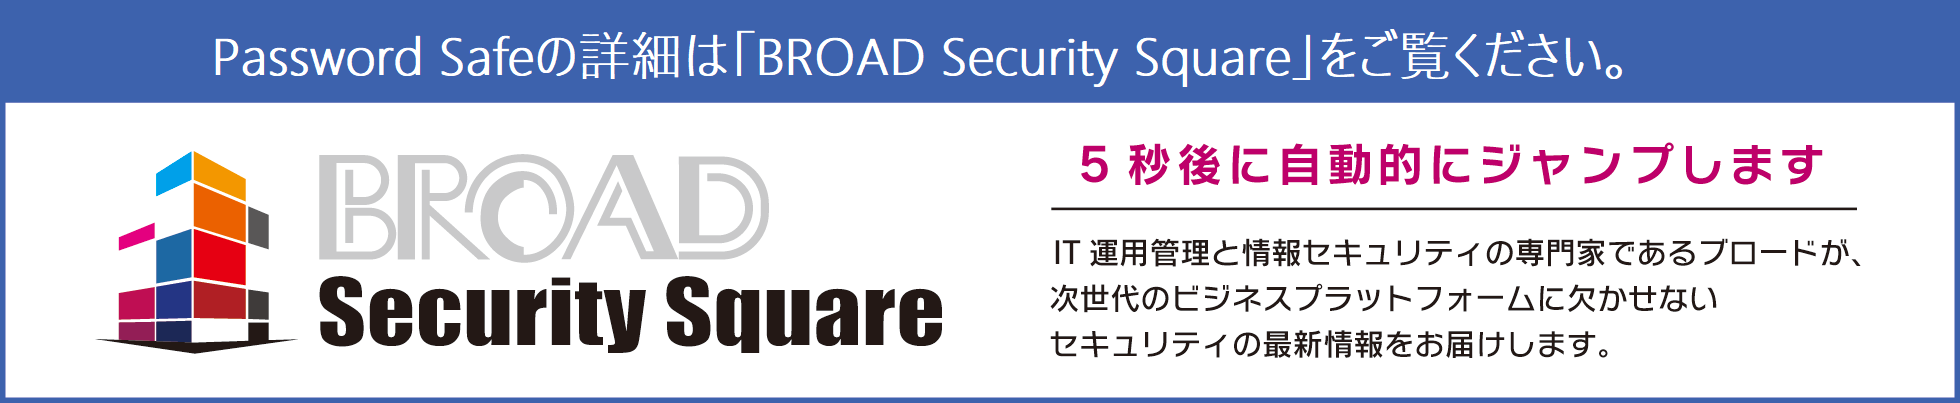 Password Safeの最新情報はBROAD Security Squareをご覧ください。